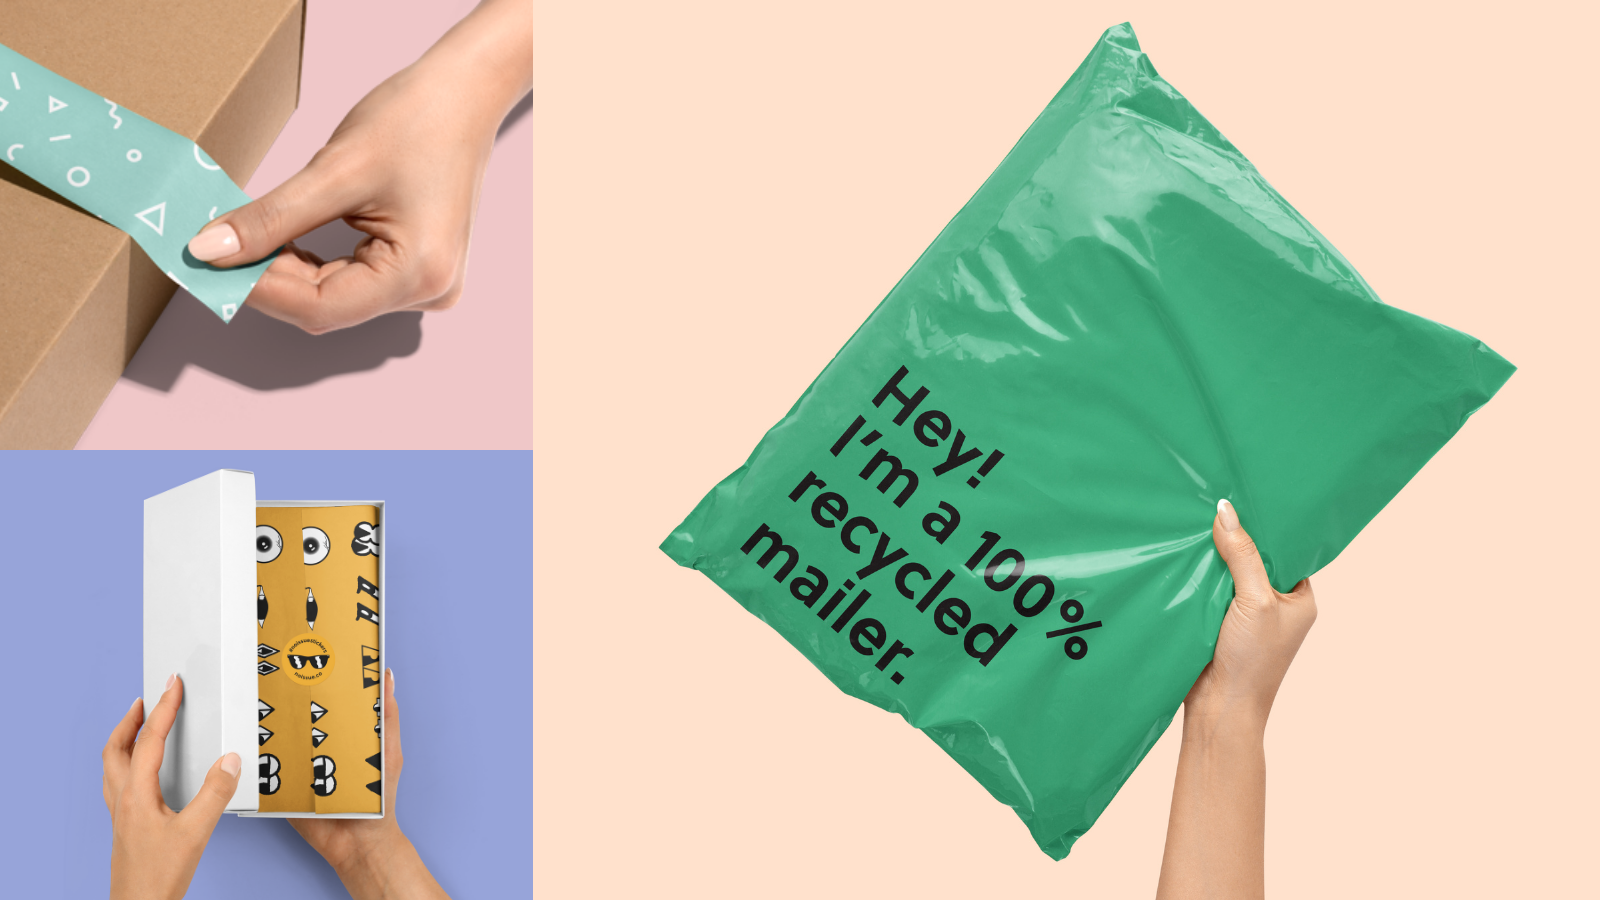 Biodegradable Packing Air Bags / Pillows Boxed - China Air Pillow